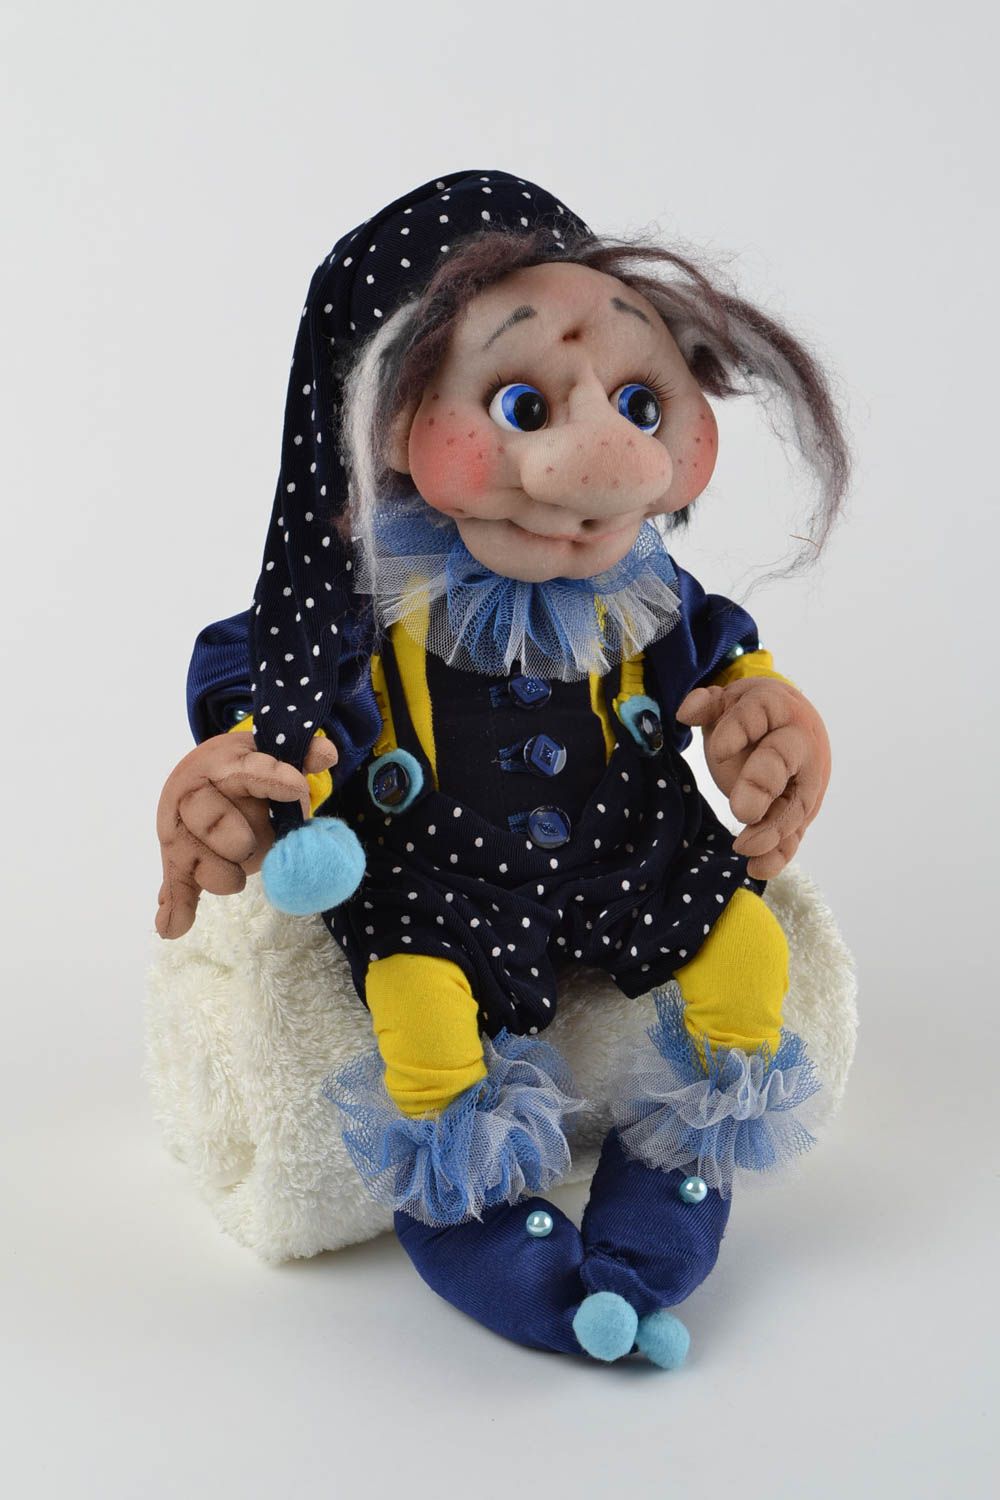 Handmade soft toy fabric gnome doll present for children designer interior ideas photo 1